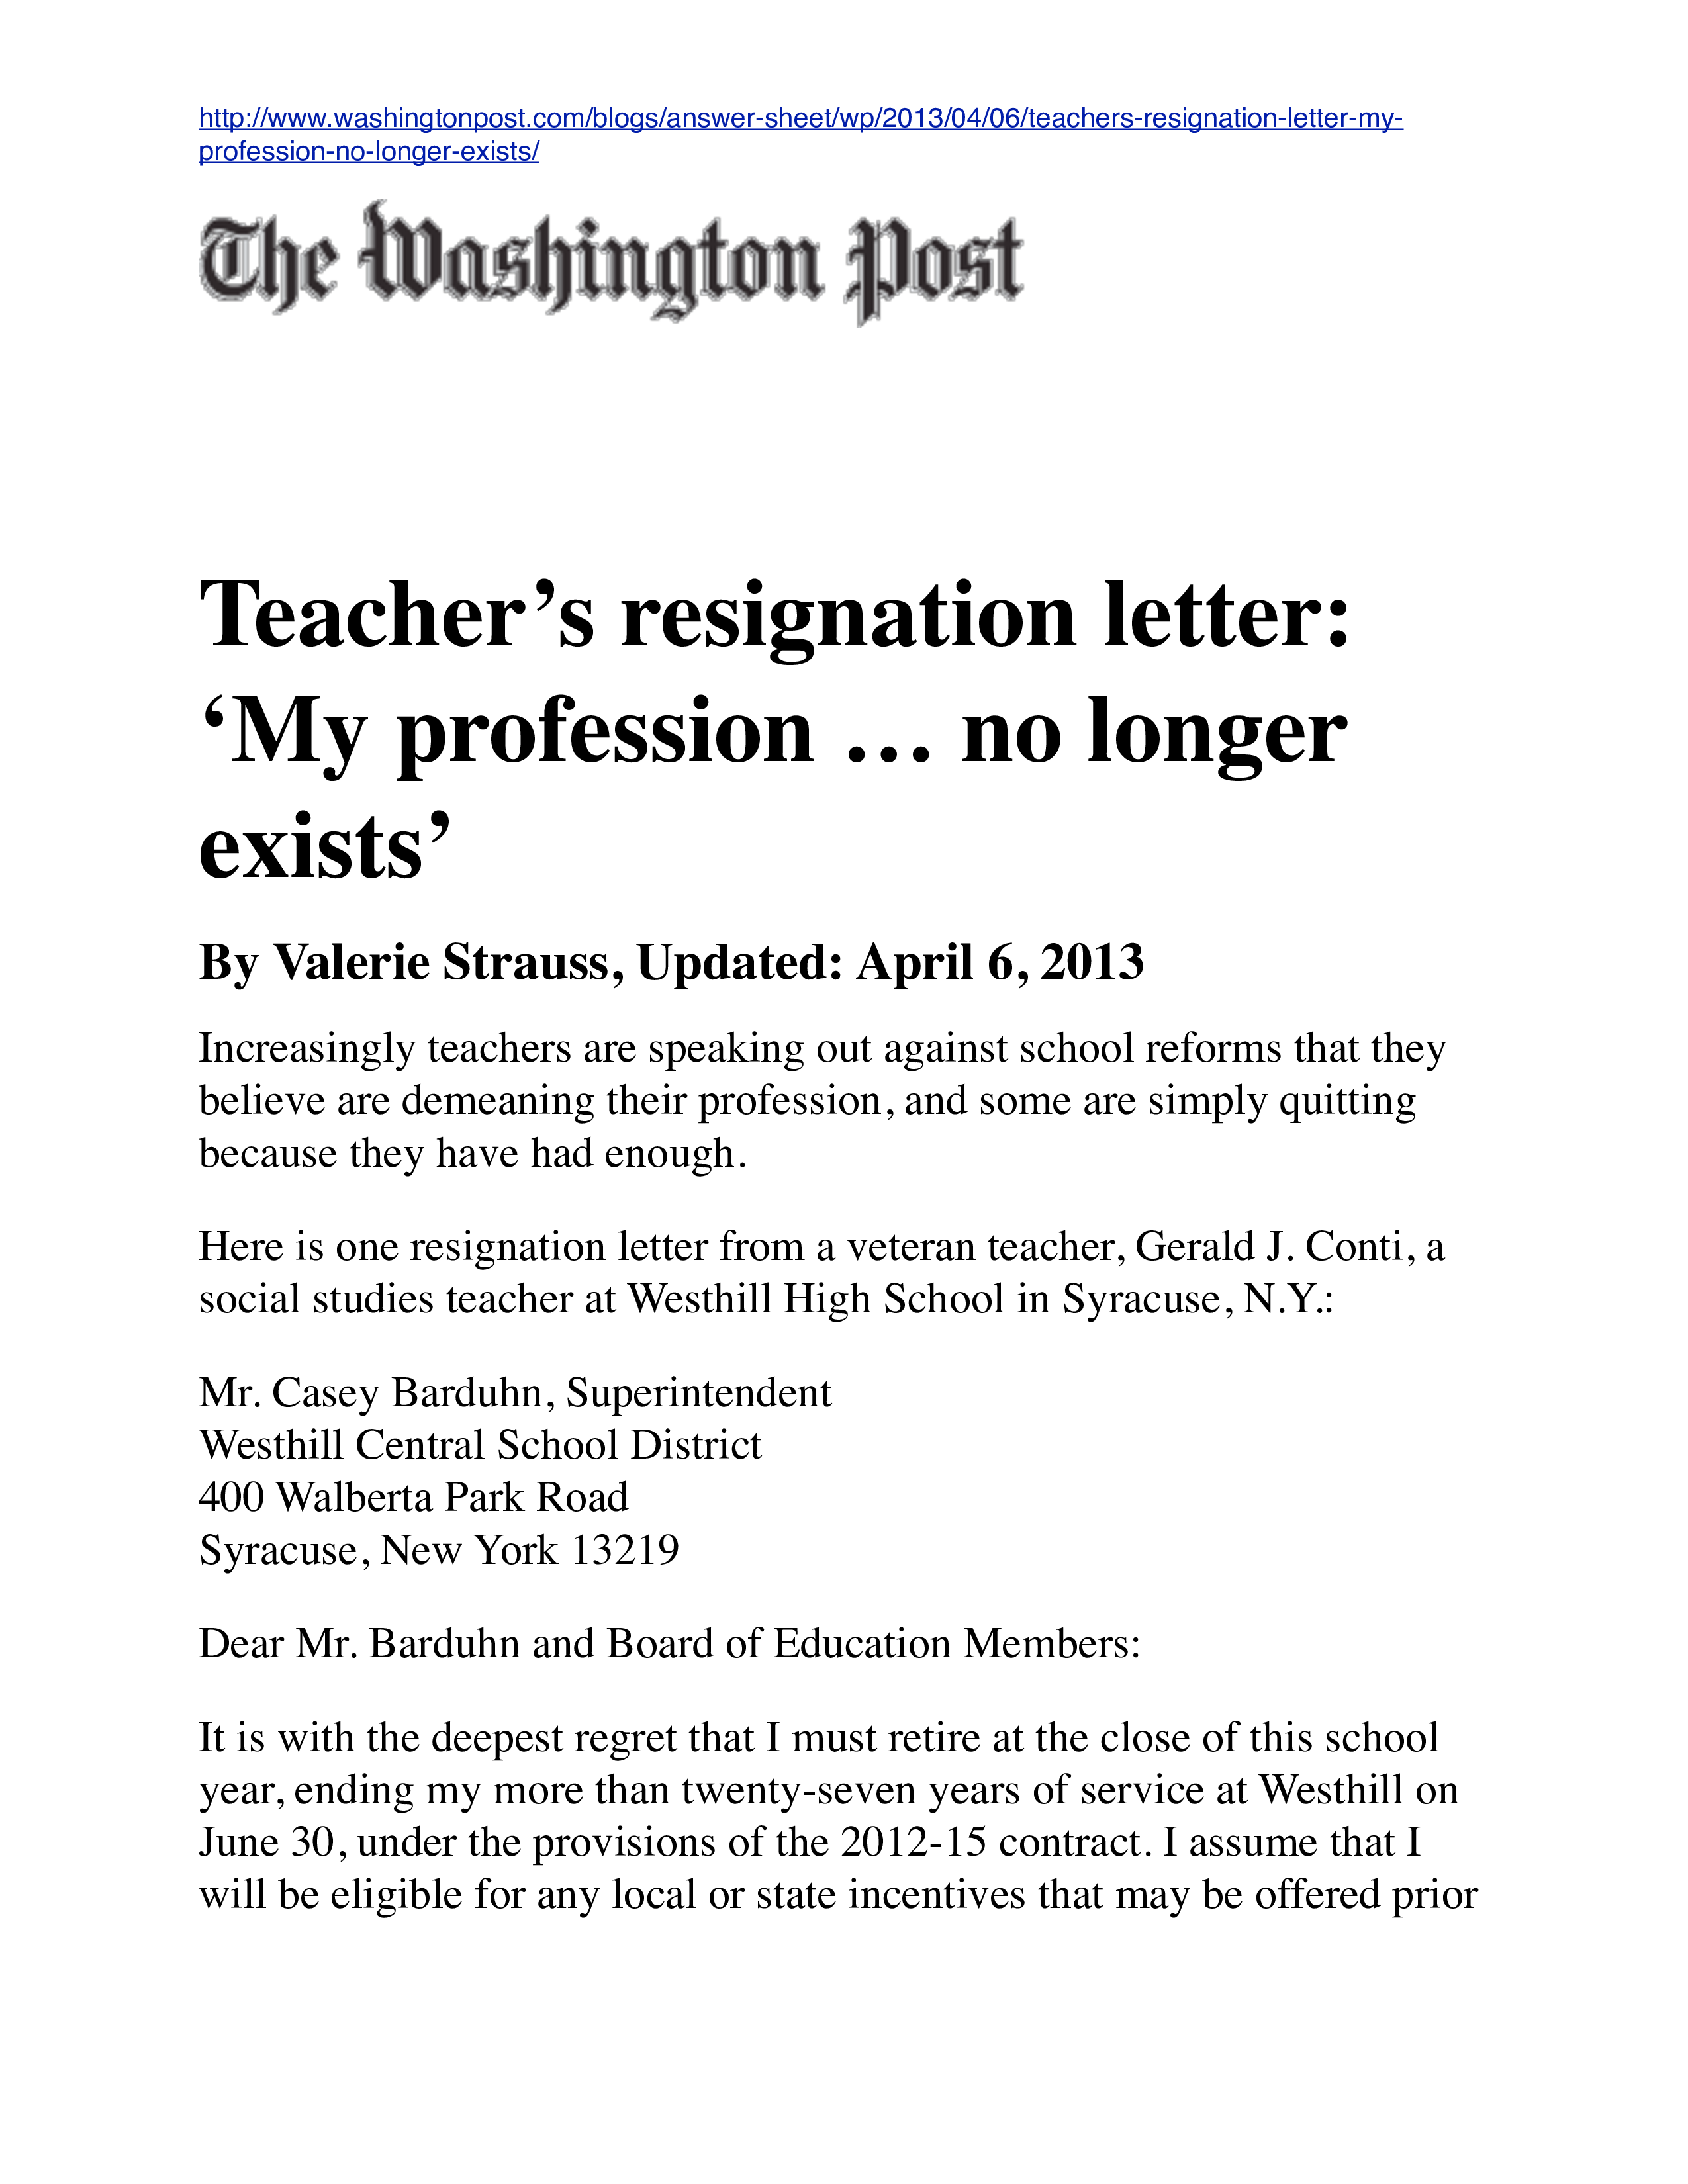 Experienced Teacher's Resignation Letter main image